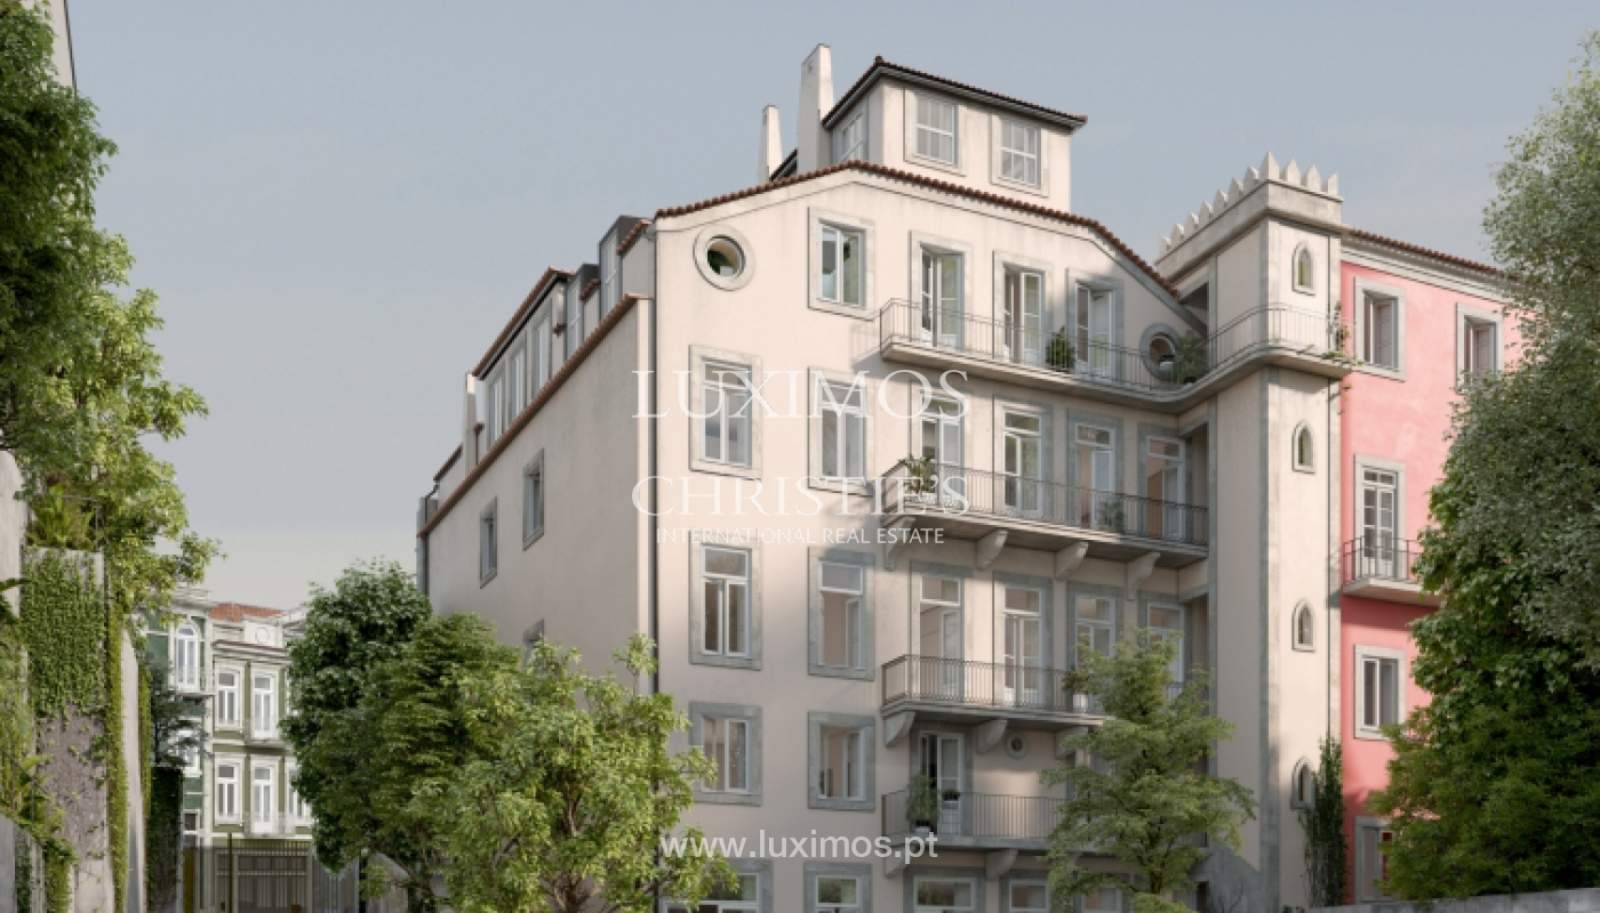 Venda apartamento duplex novo, empreendimento de luxo, Cedofeita, Porto_161637